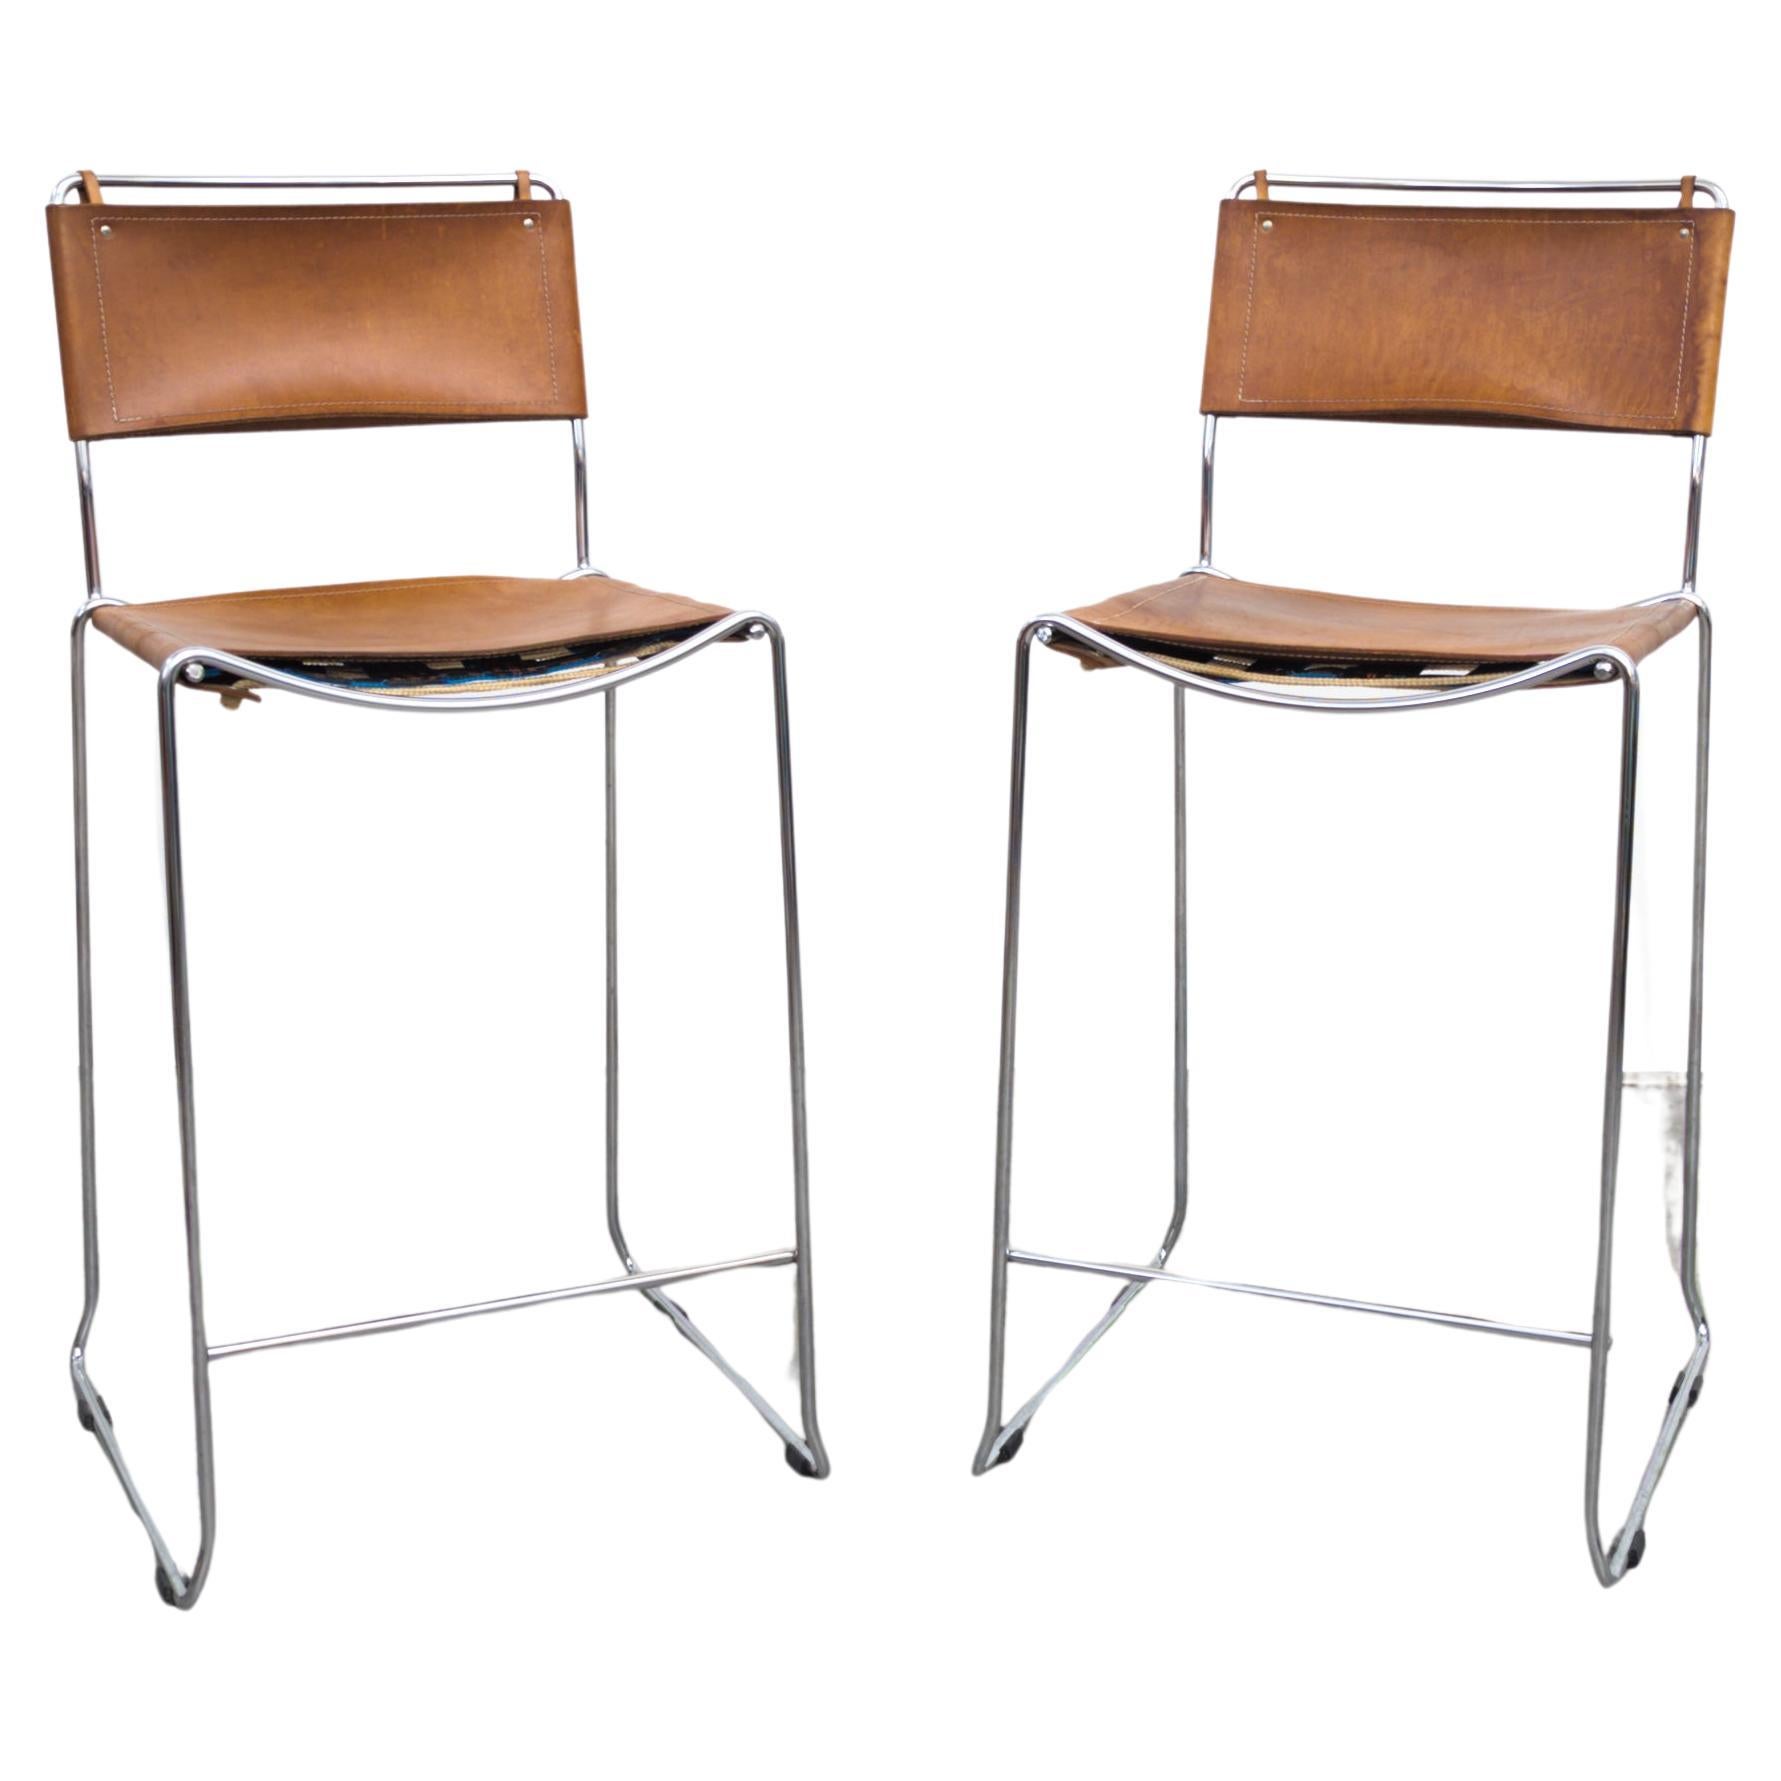 Pair of vintage leather bar stools by Giandomenico Belotti for Alias, 1970s